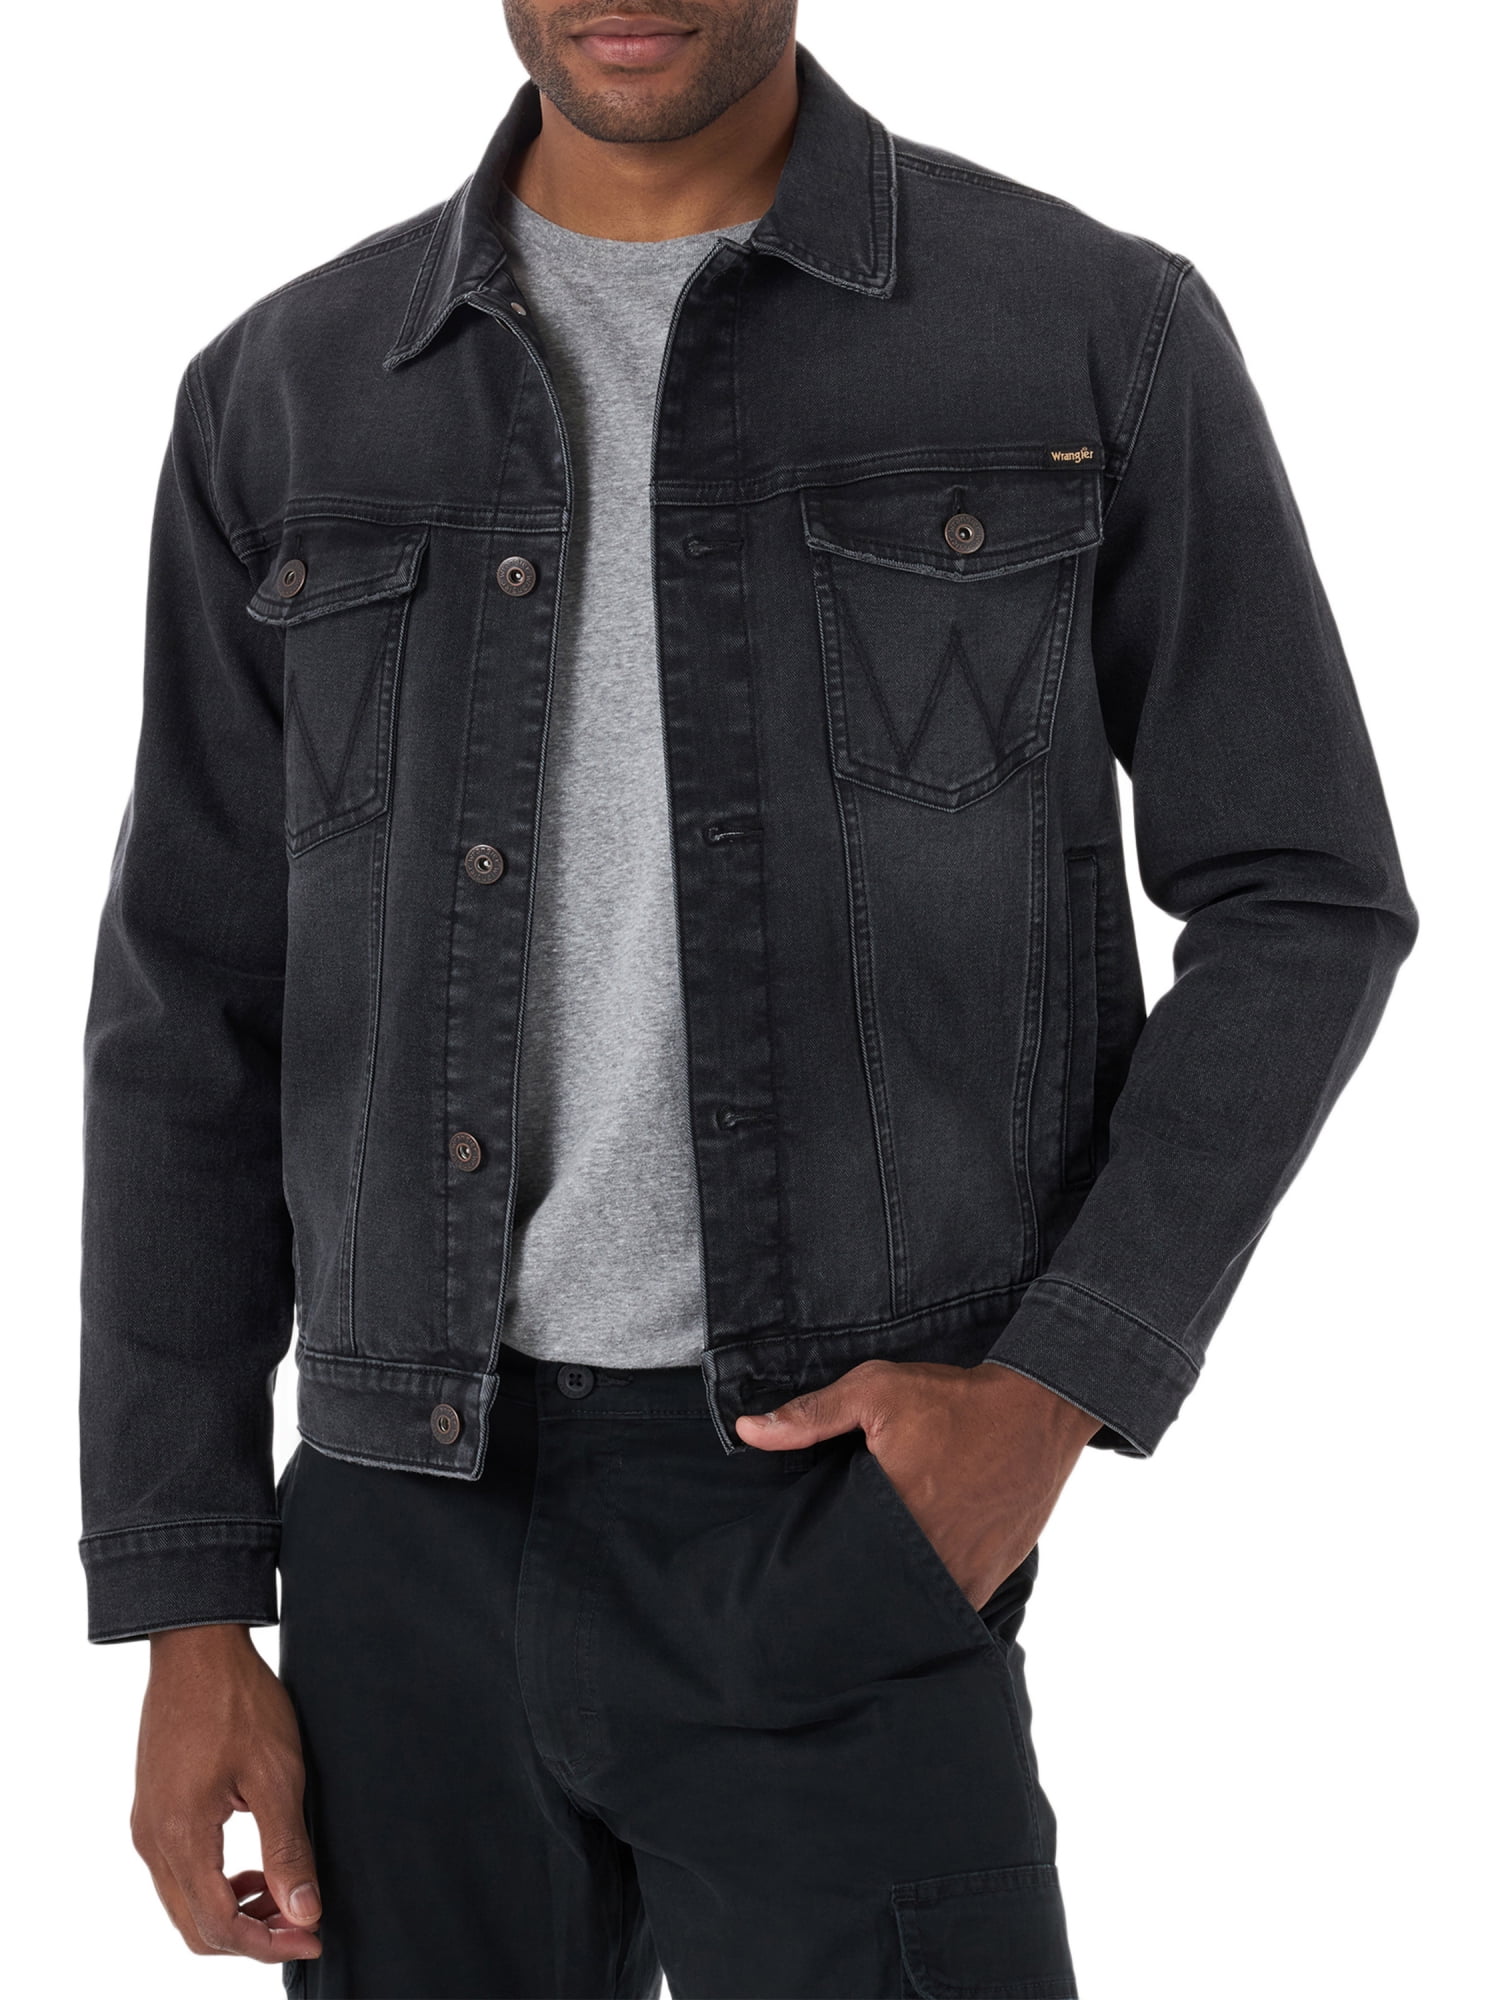 81 Men's black denim jacket outfits ideas in 2023  black denim jacket, black  denim jacket outfit, jacket outfits